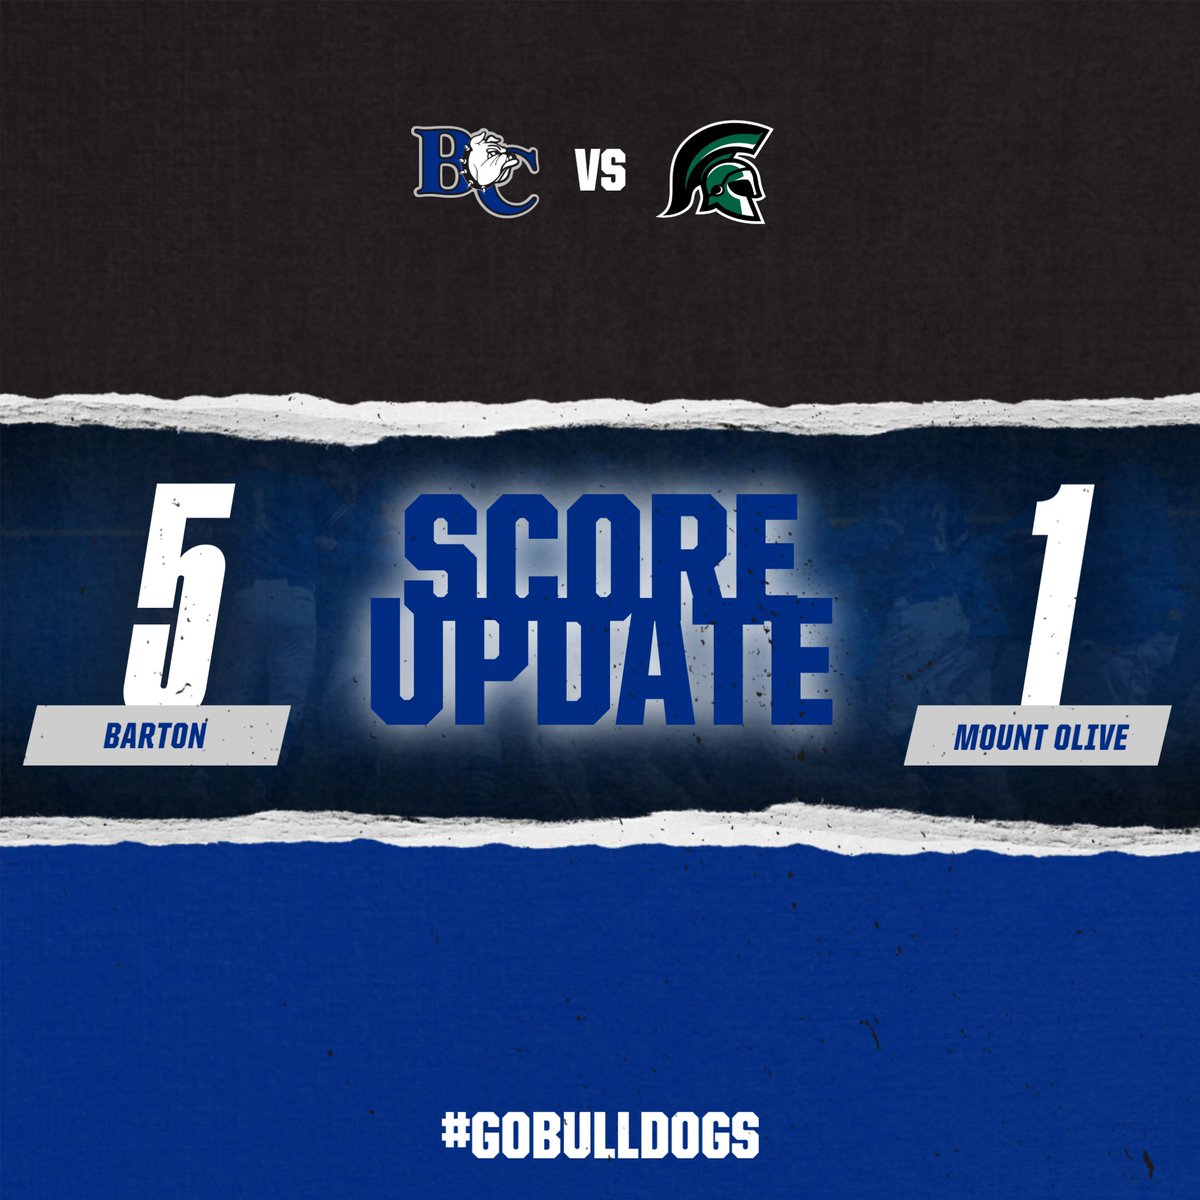 A couple home runs help bulldogs lead after 3. #GoBulldogs